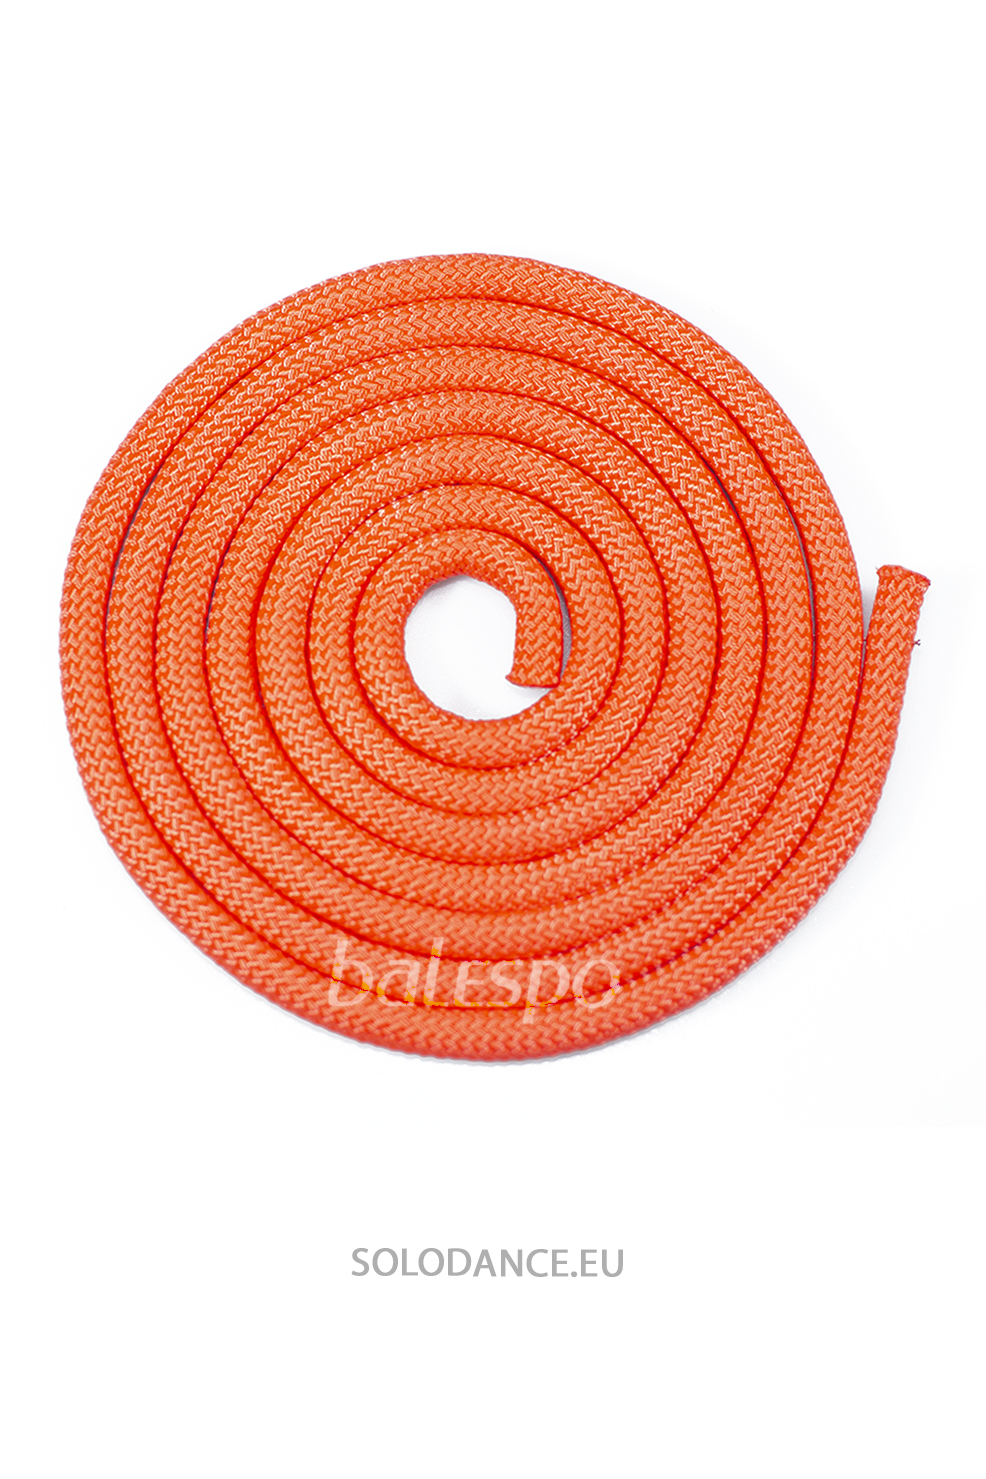 Gymnastic rope BALESPO neon orange 3 m 